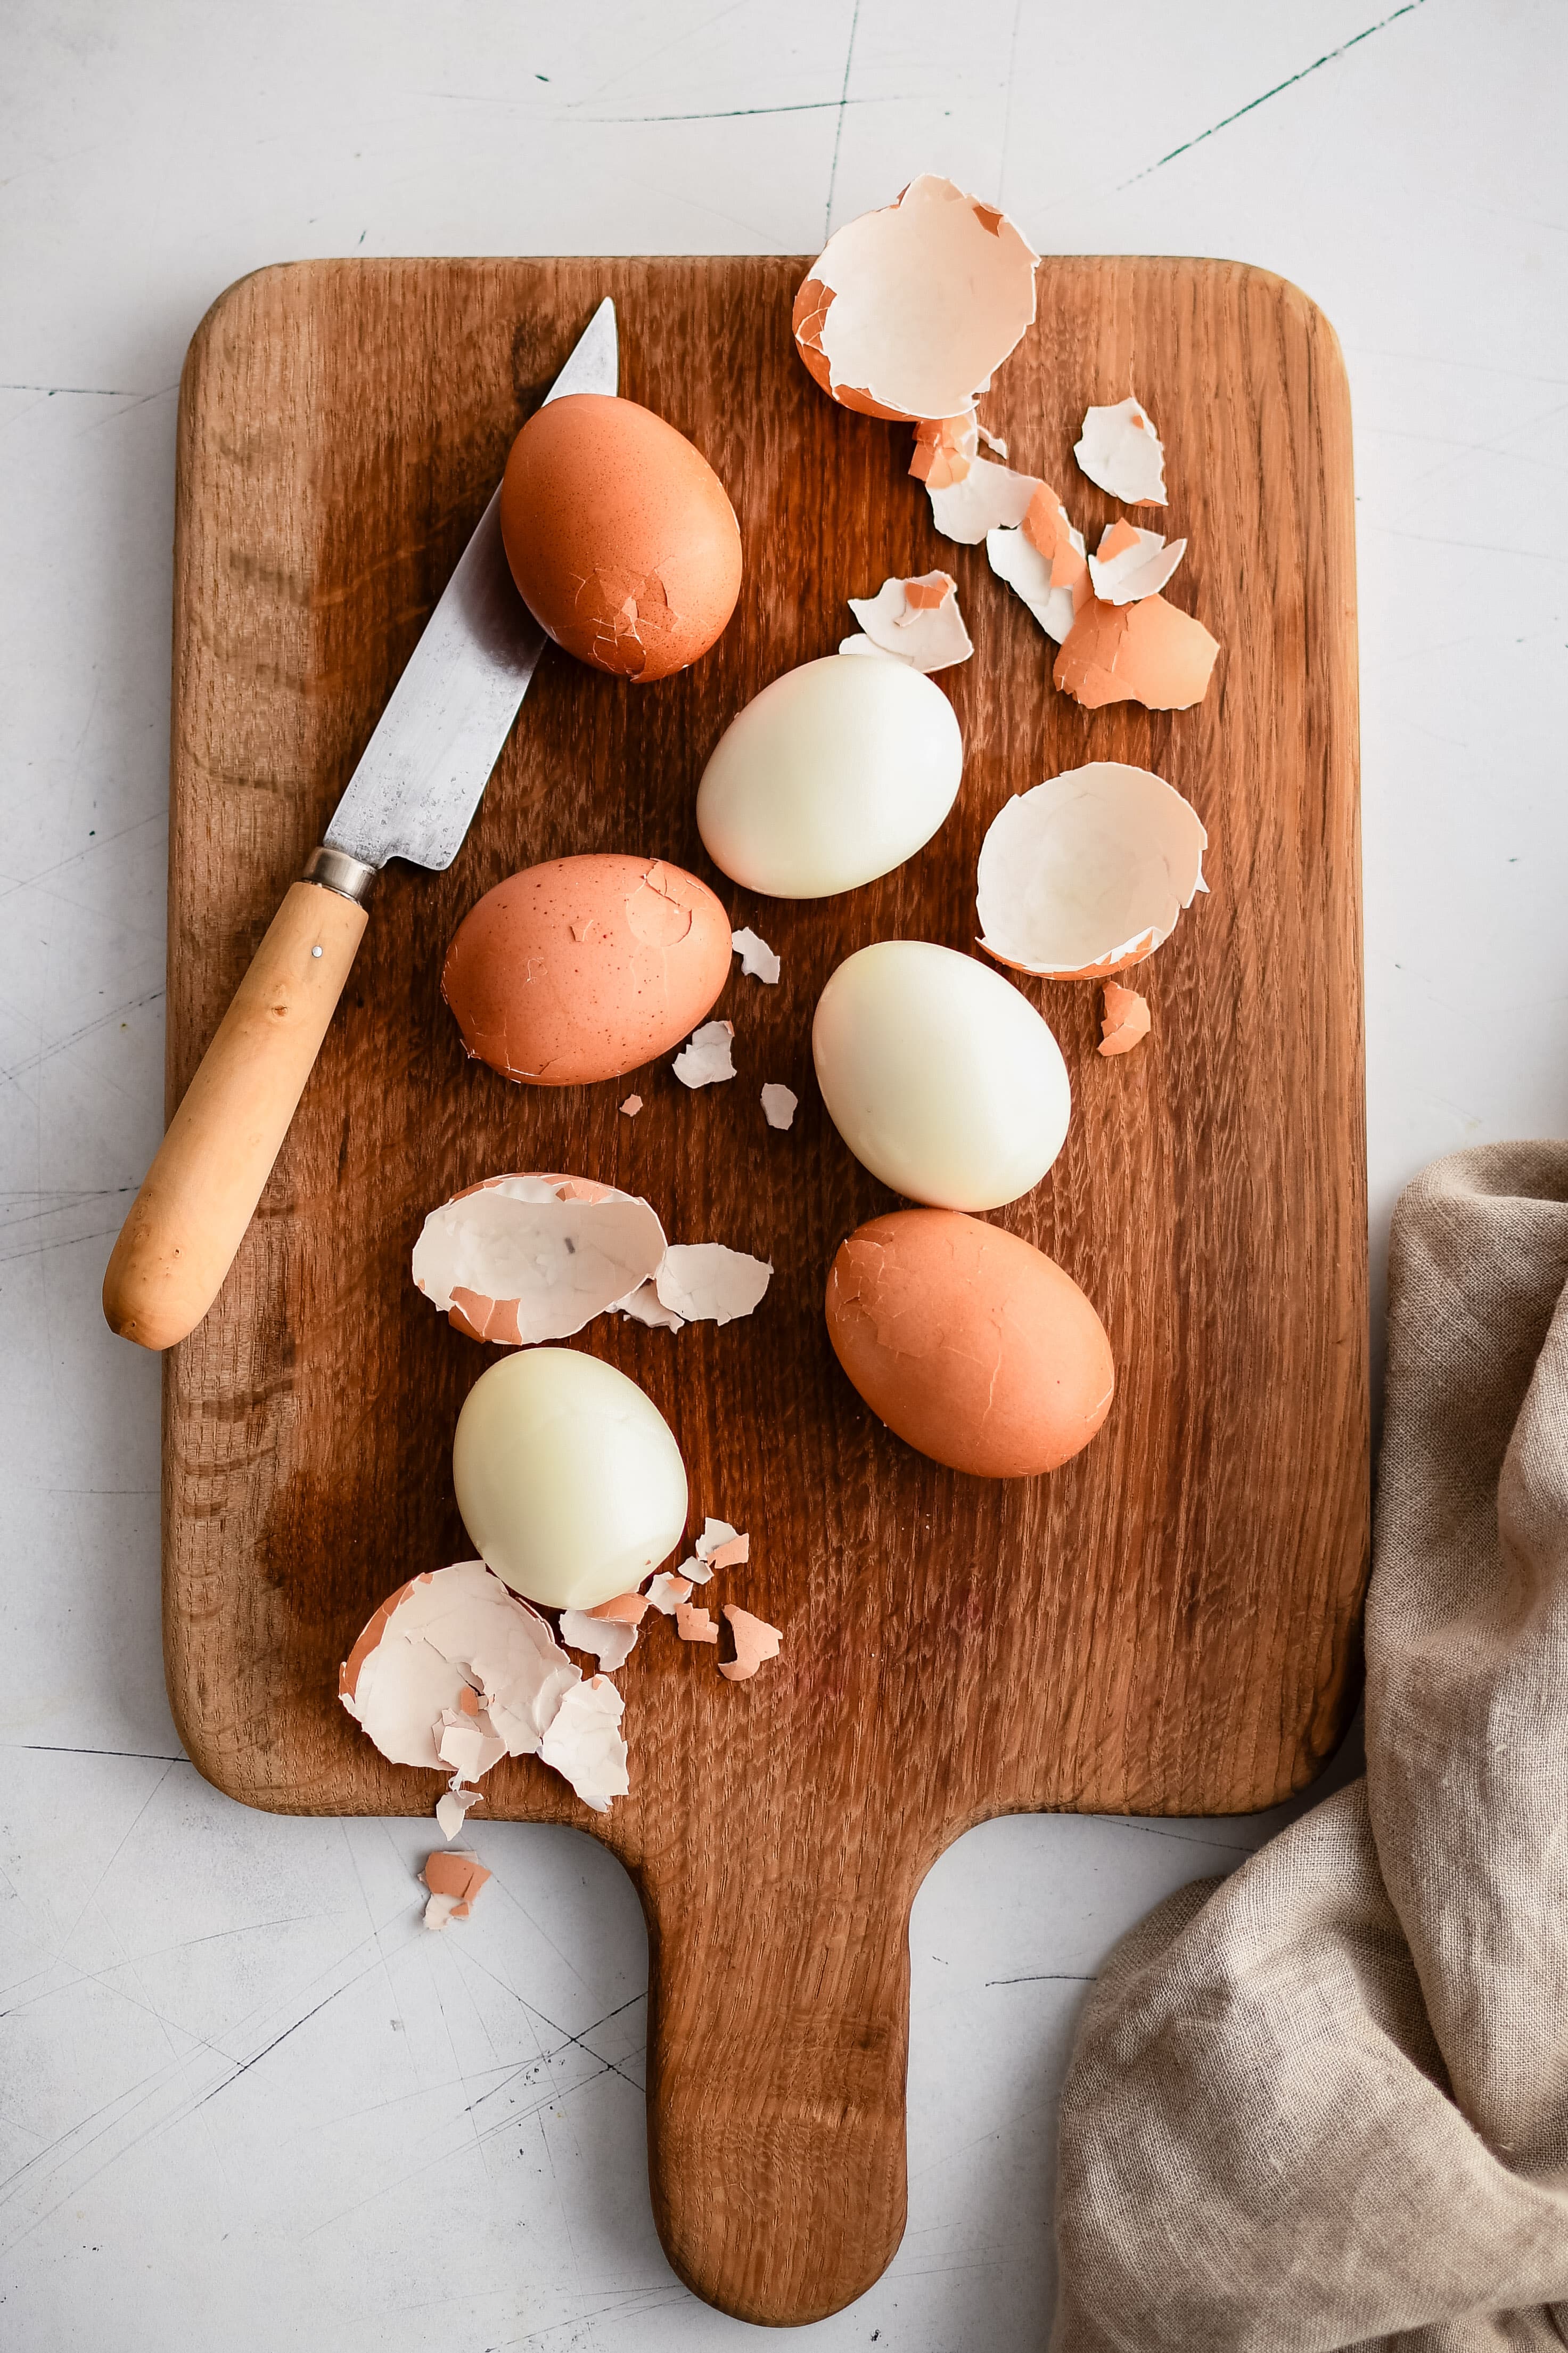 Wooden cutting board with three peeled hard-boiled eggs and three unpeeled hard-boiled eggs.